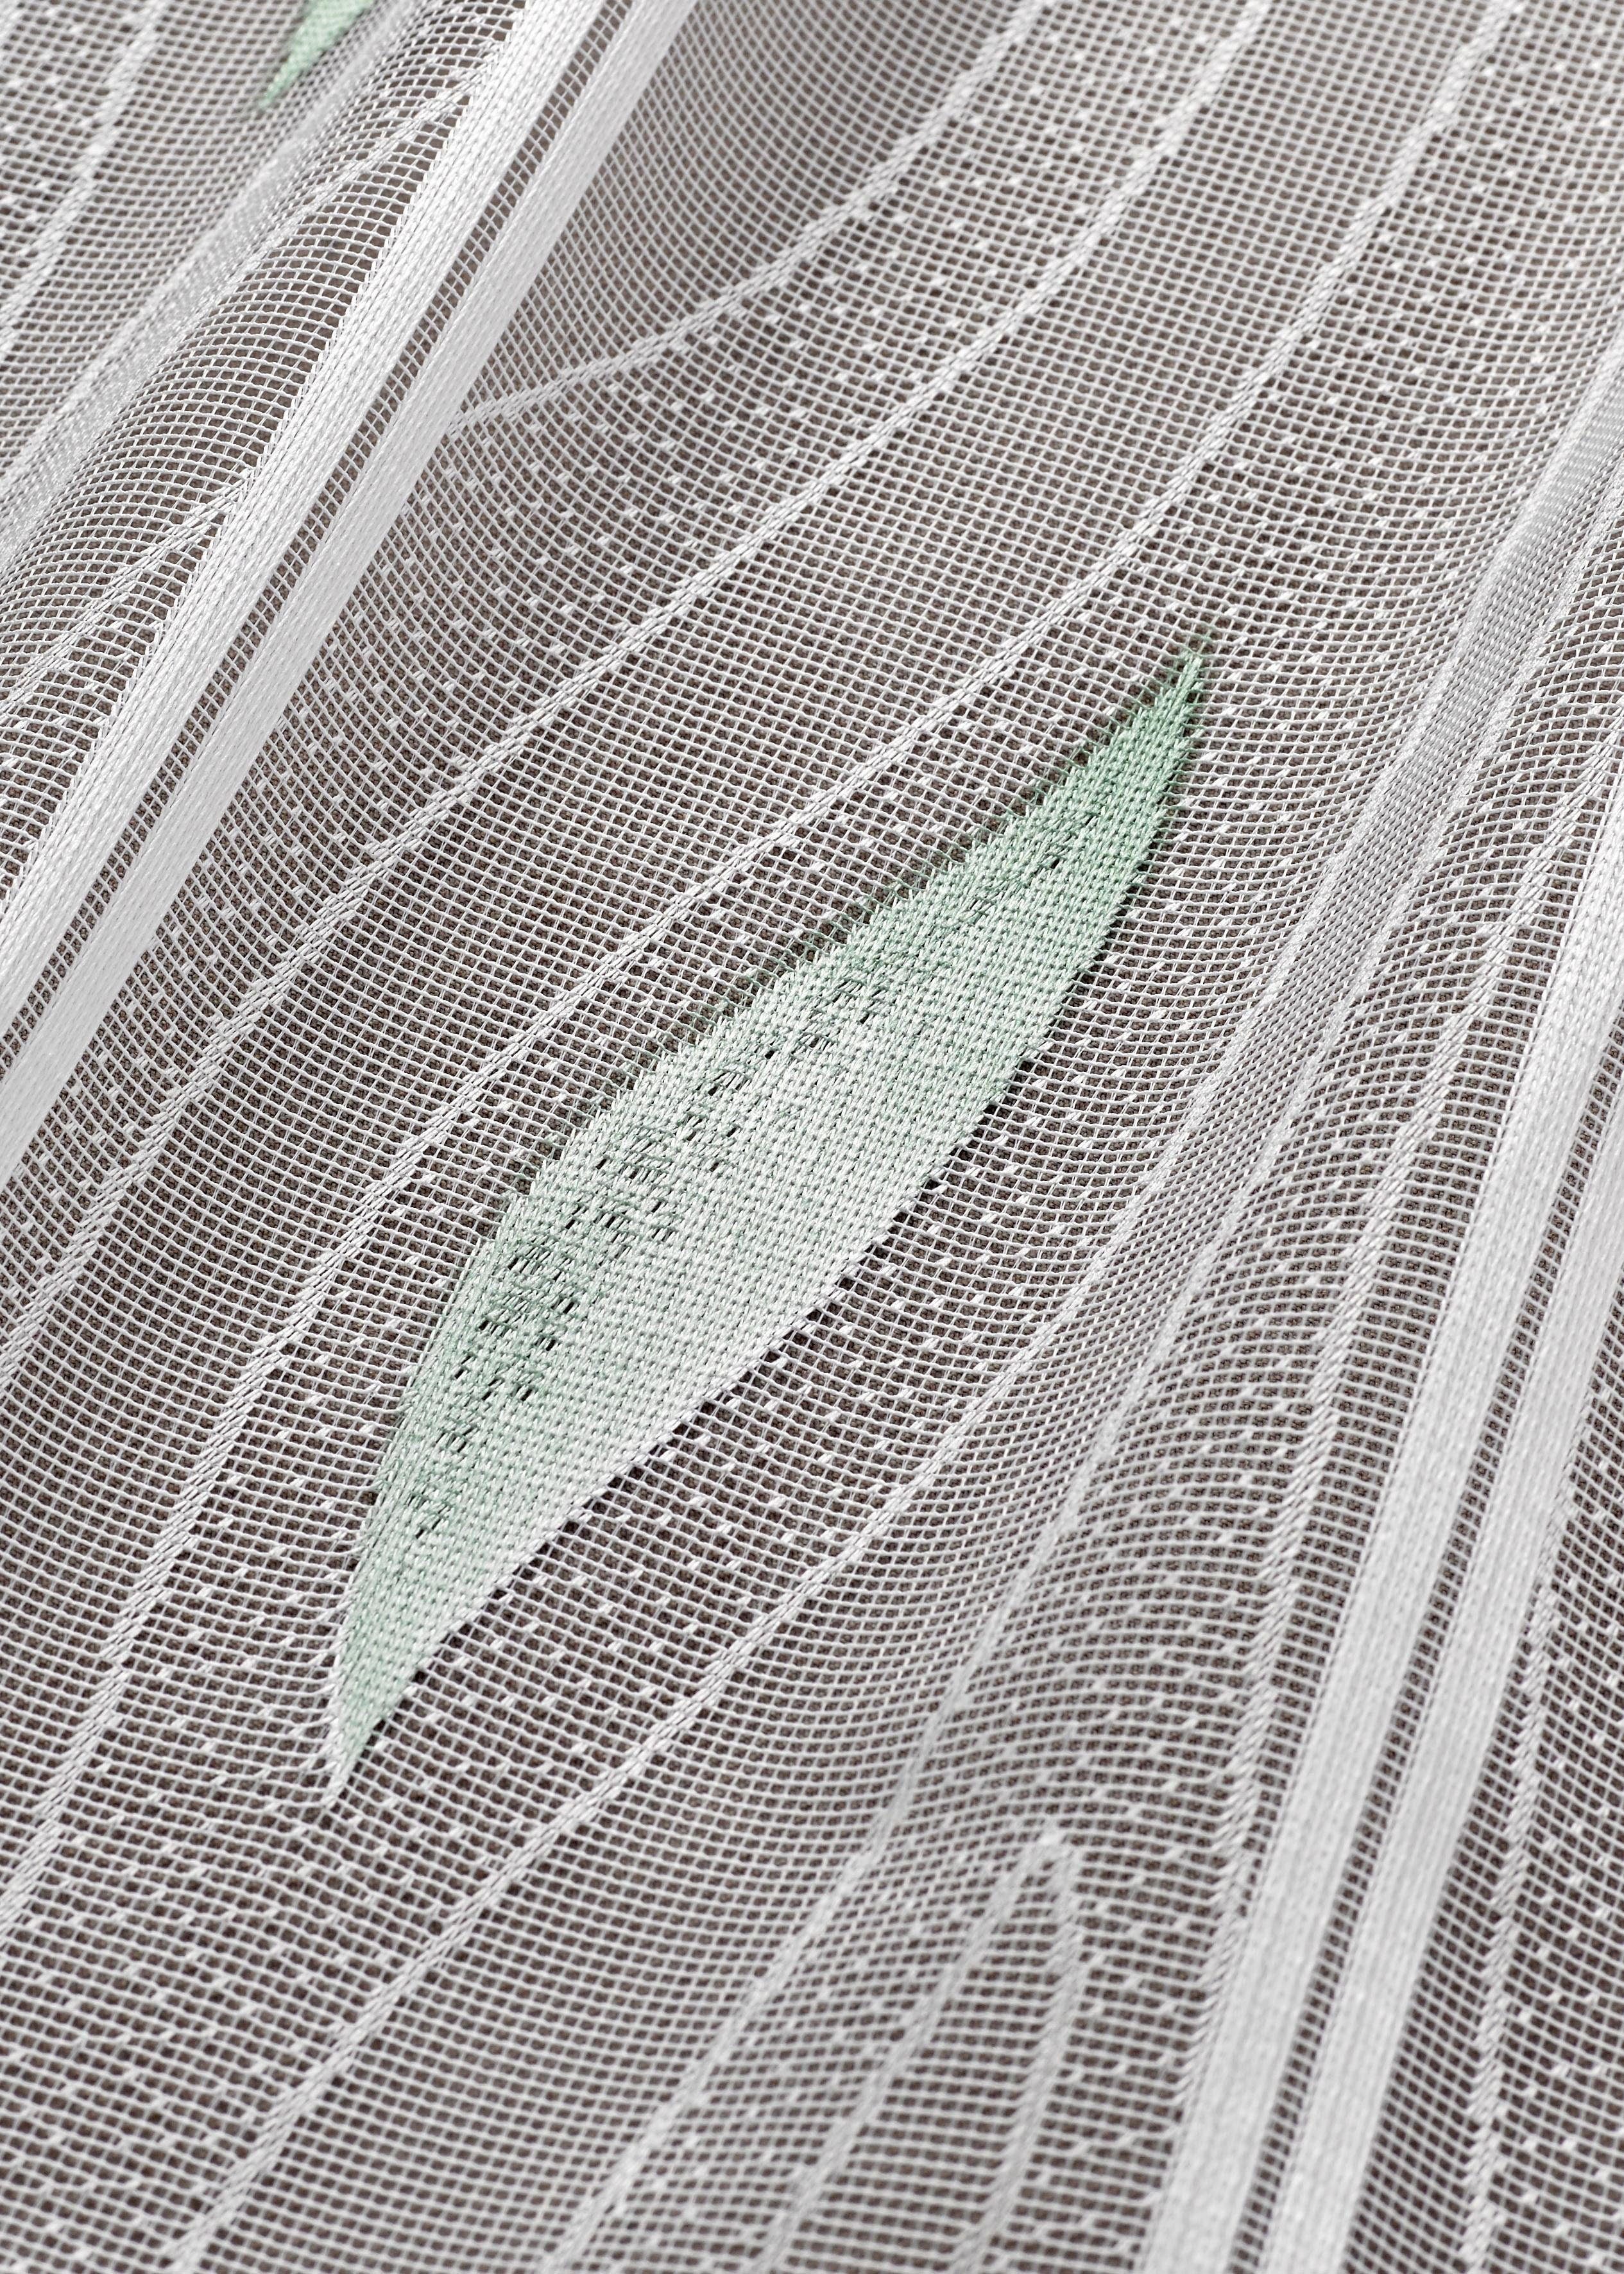 Scheibengardine Mathilda, transparent, St), grün/weiß/apricot (1 Stangendurchzug VHG, Jacquard